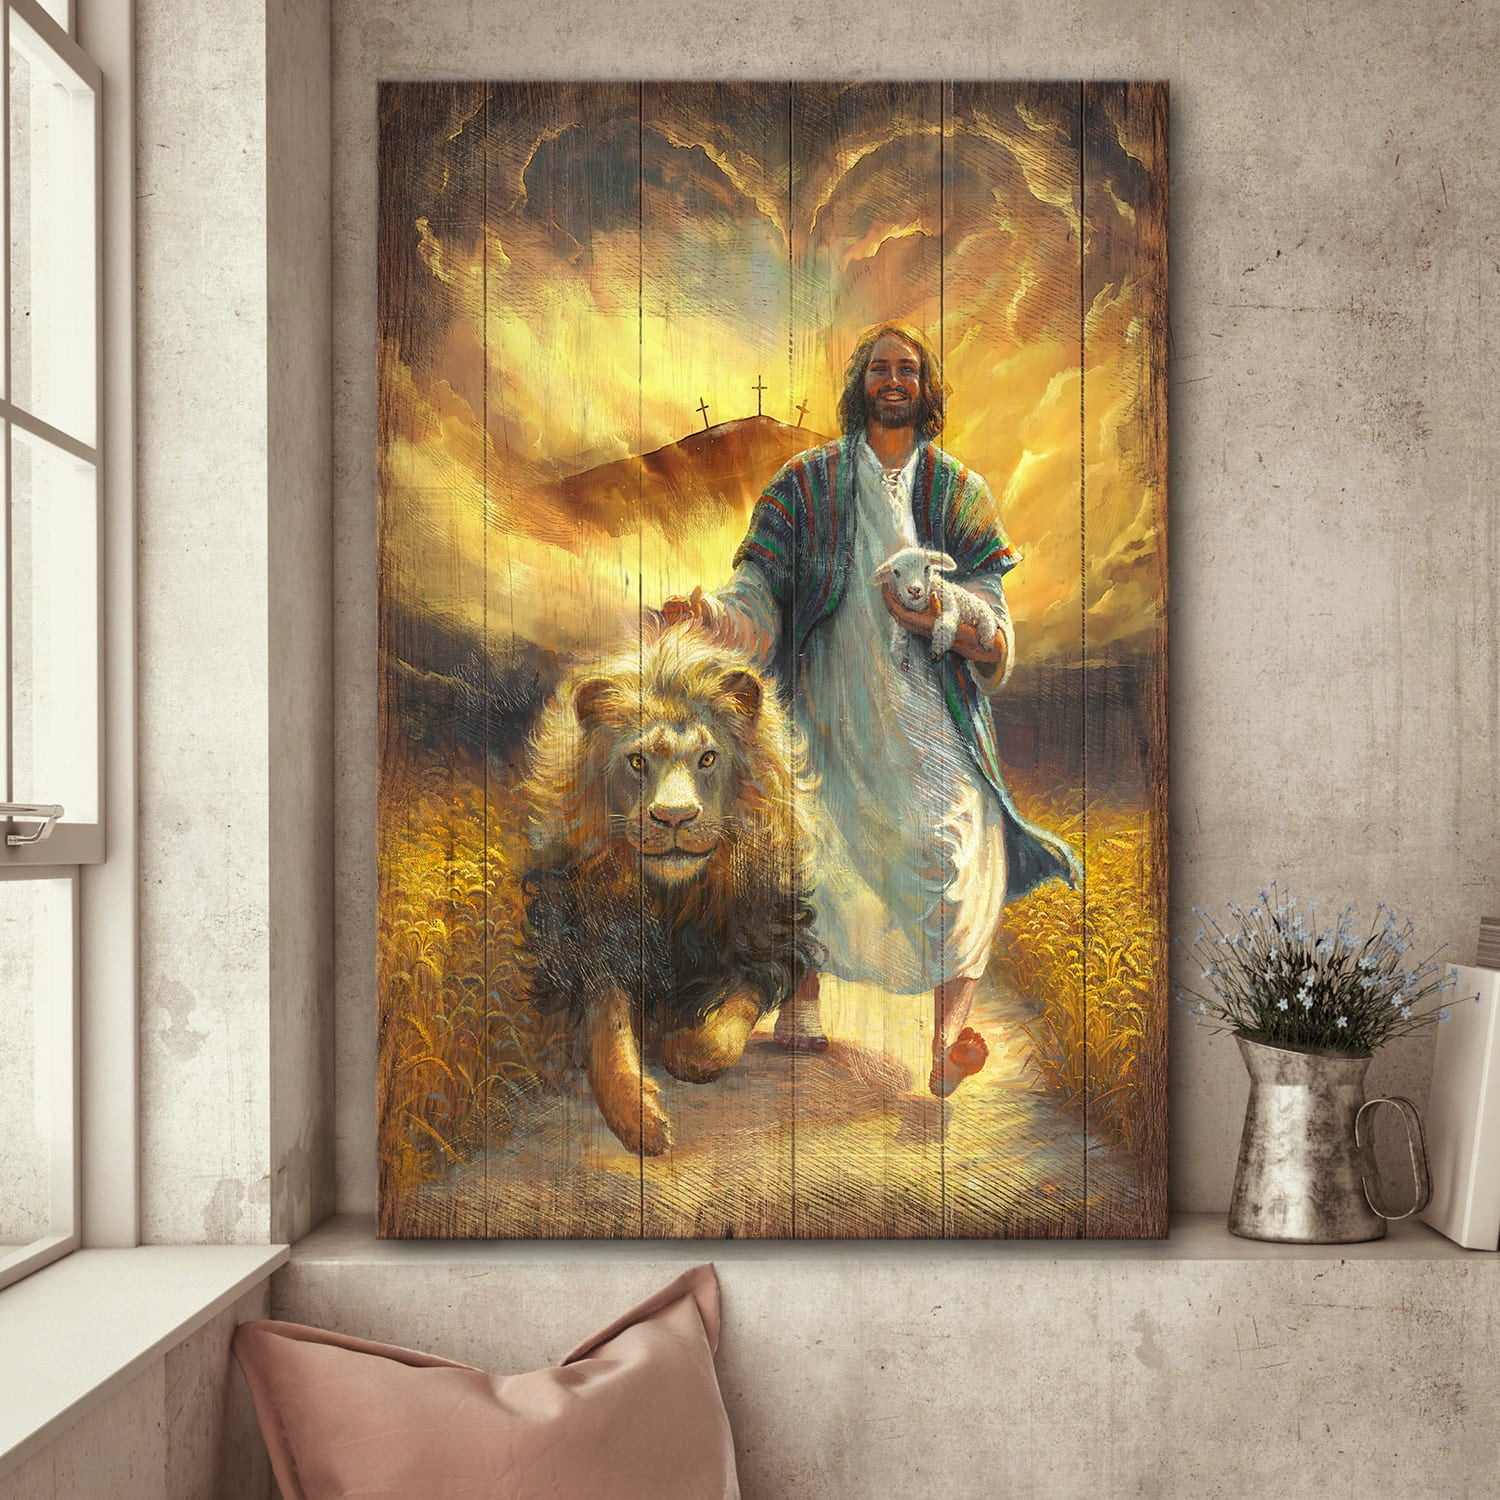 Abstract art, Jesus painting, Watercolor lion head, Lion of Judah - Je -  Wayrumble